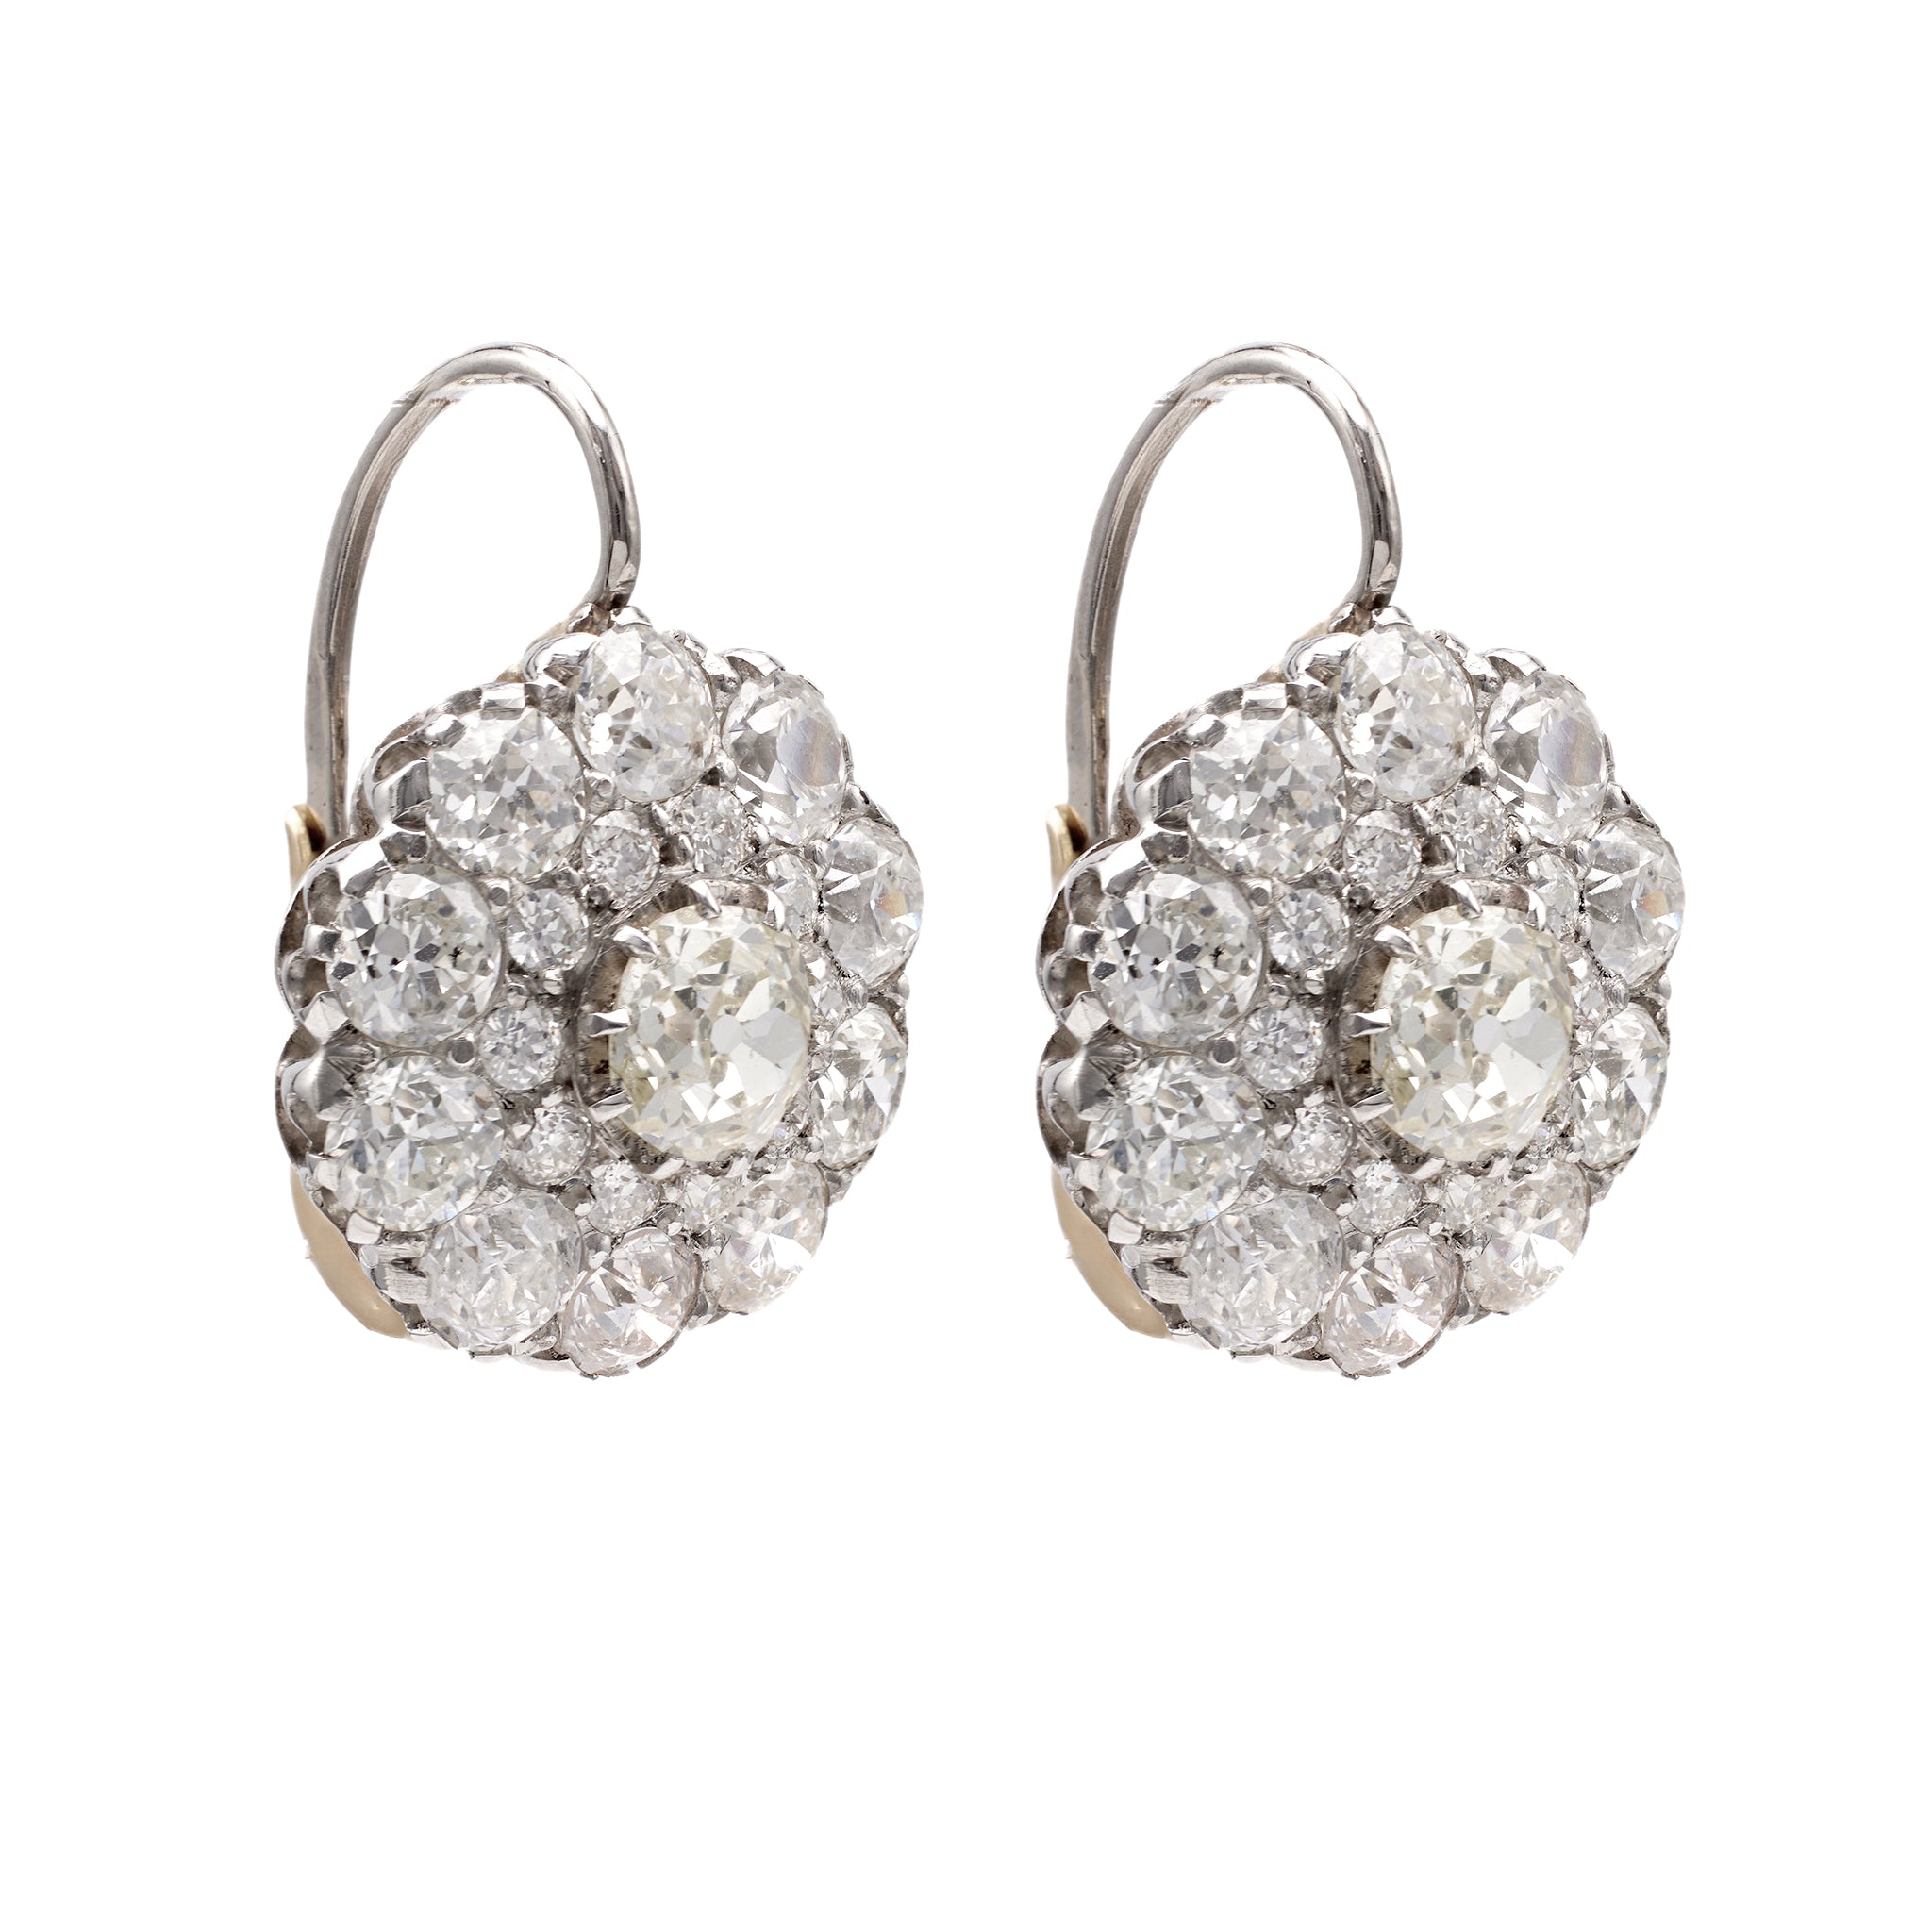 Antique Inspired Diamond 5.59 Carat Platinum Cluster Earrings Earrings Jack Weir & Sons   